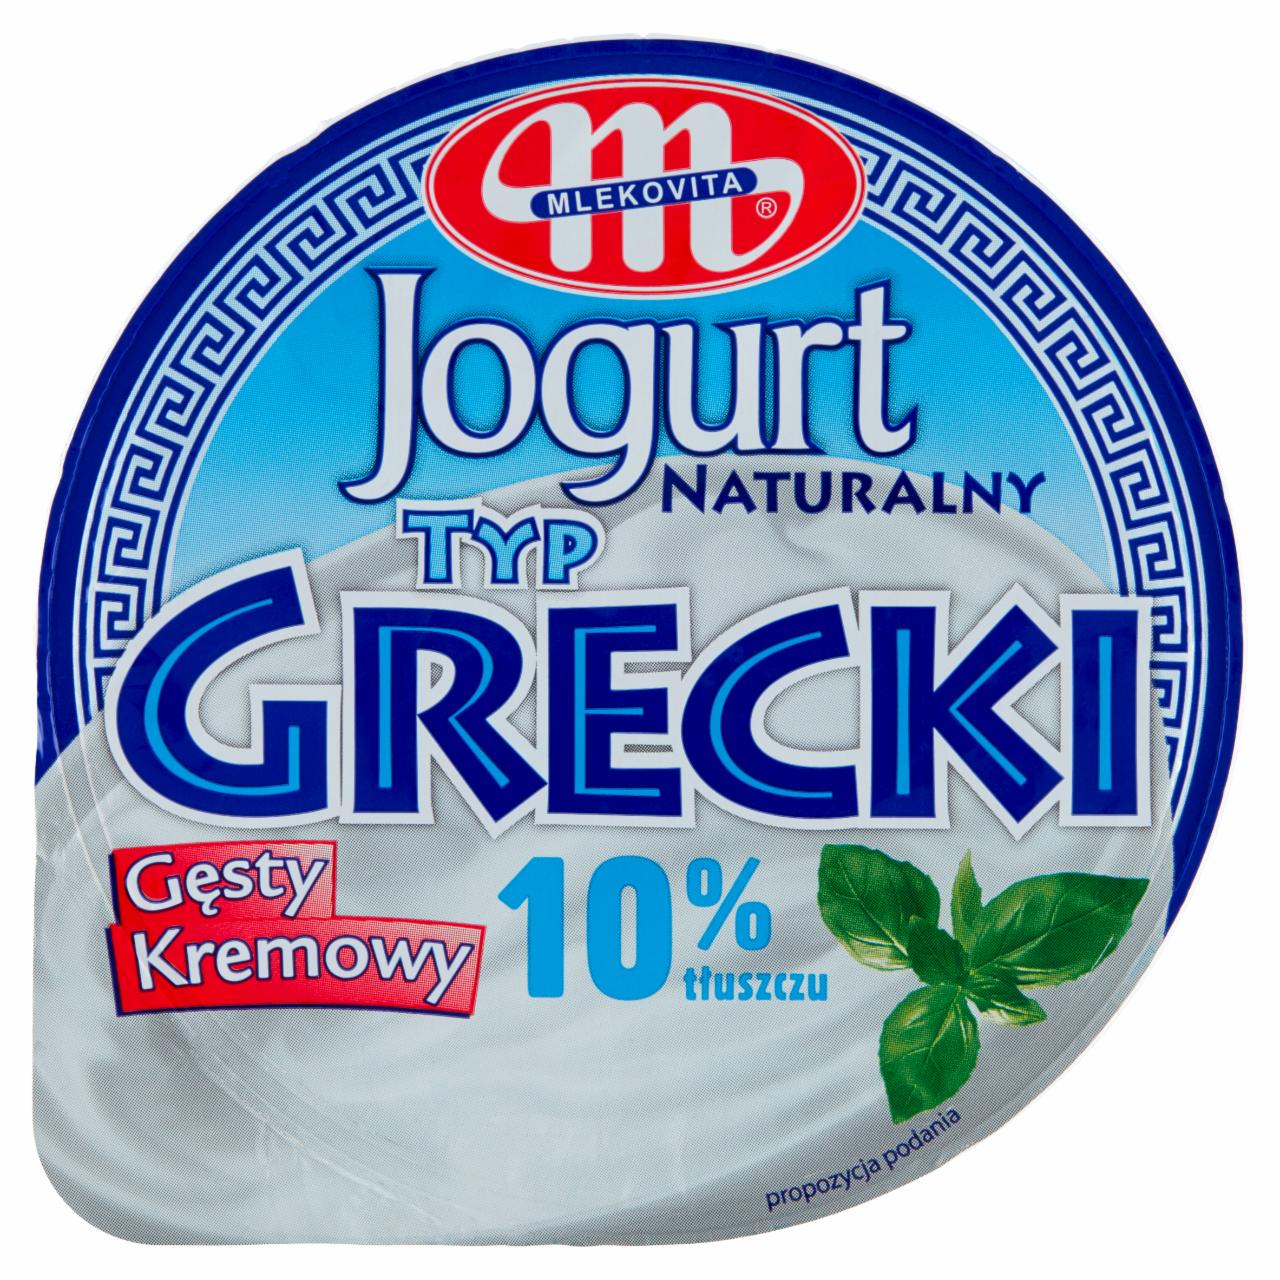 Zdjęcia - Mlekovita Jogurt naturalny typ grecki 200 g